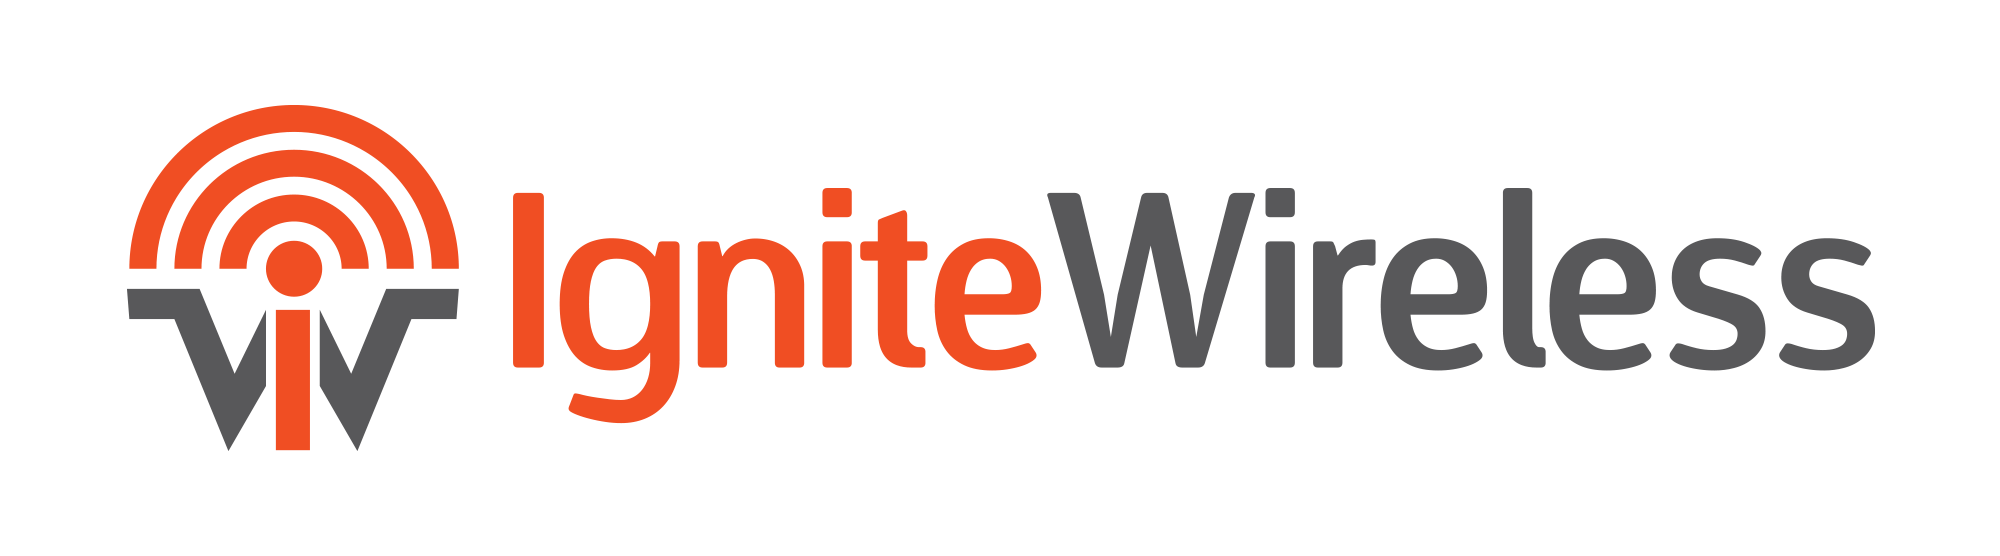 Ignite Wireless, Inc. Logo